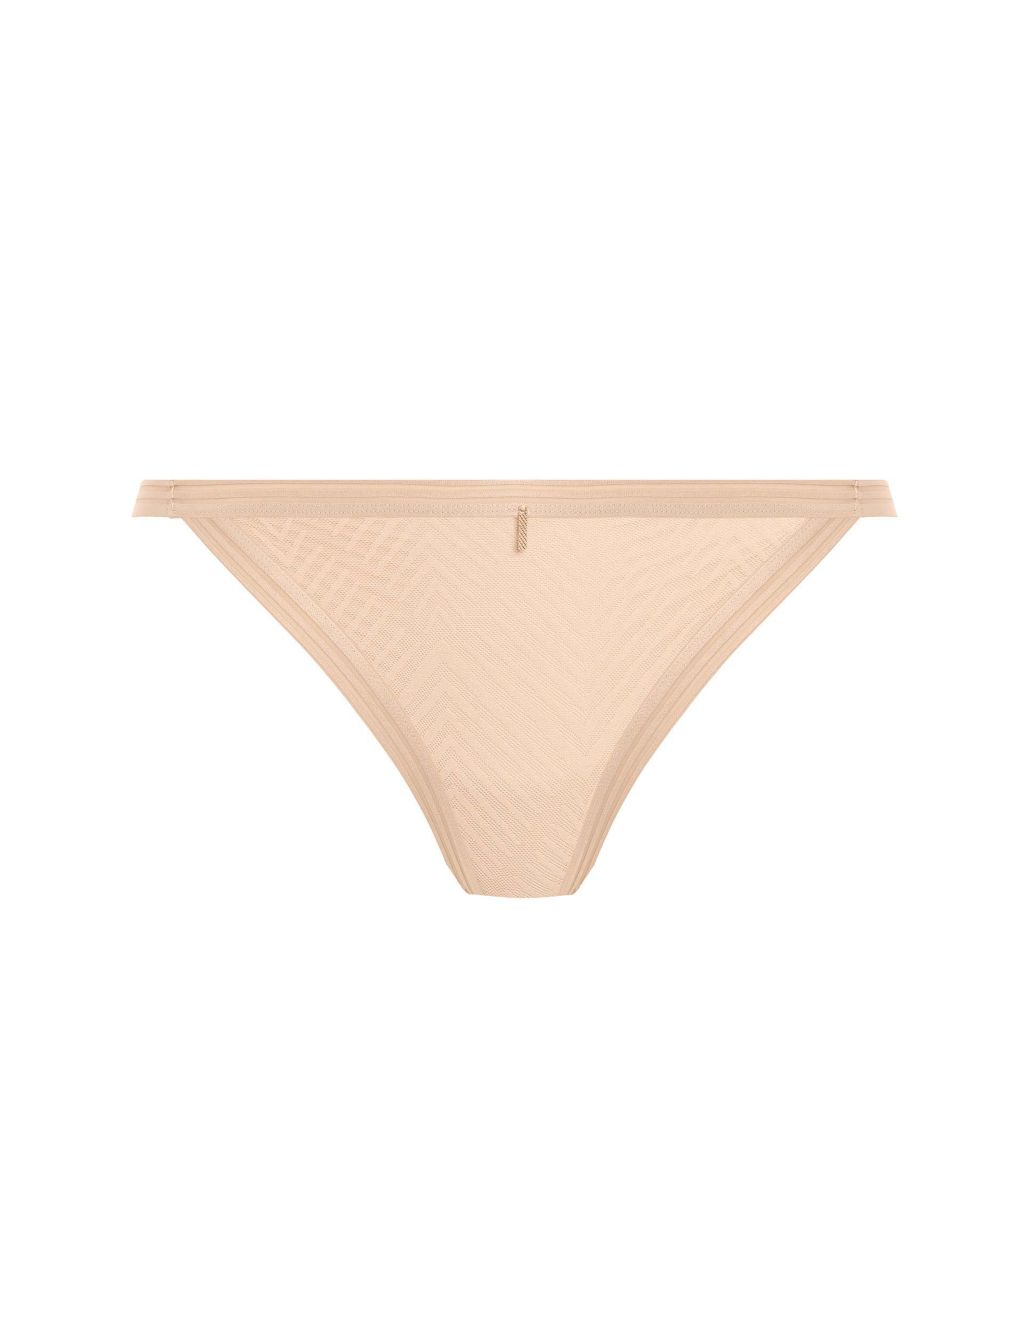 Tailored Geometric Mesh Lace Bikini Knickers image 2